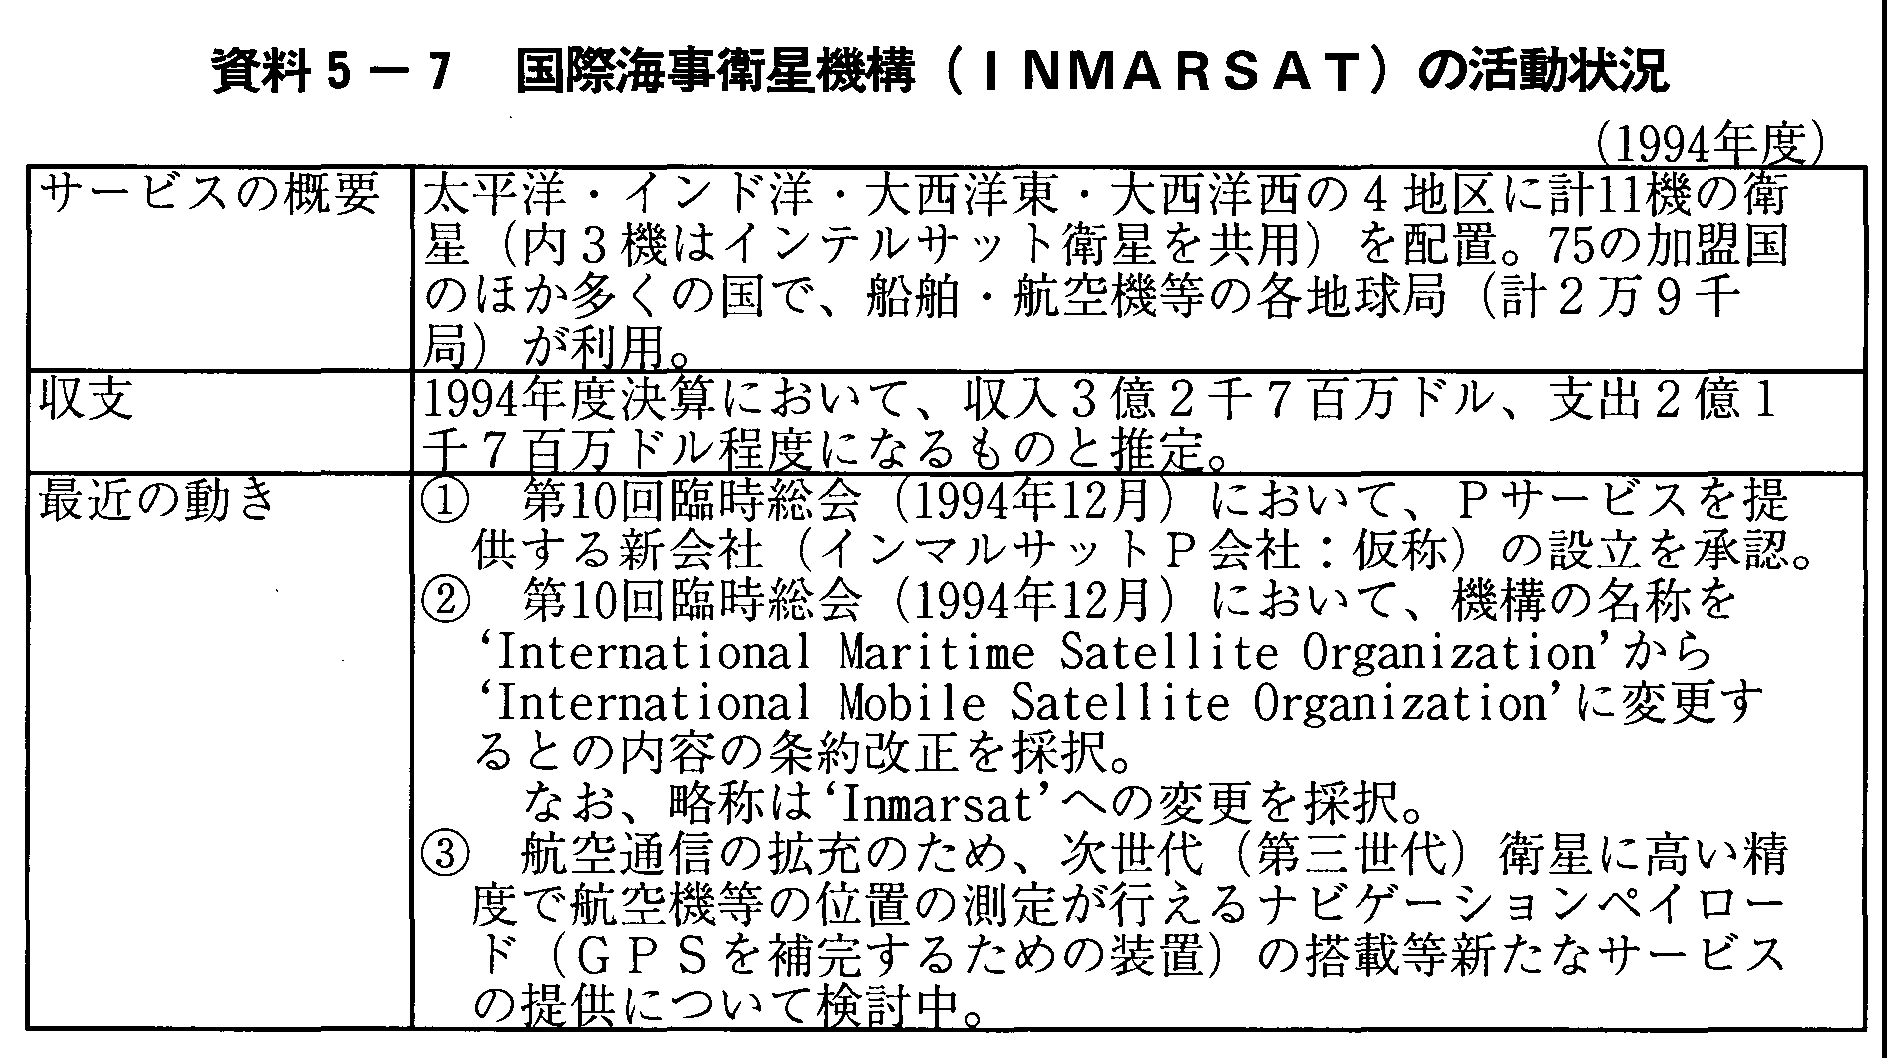 資料5-7 国際海事衛星機構(INMARSAT)の活動状況(1994年度)